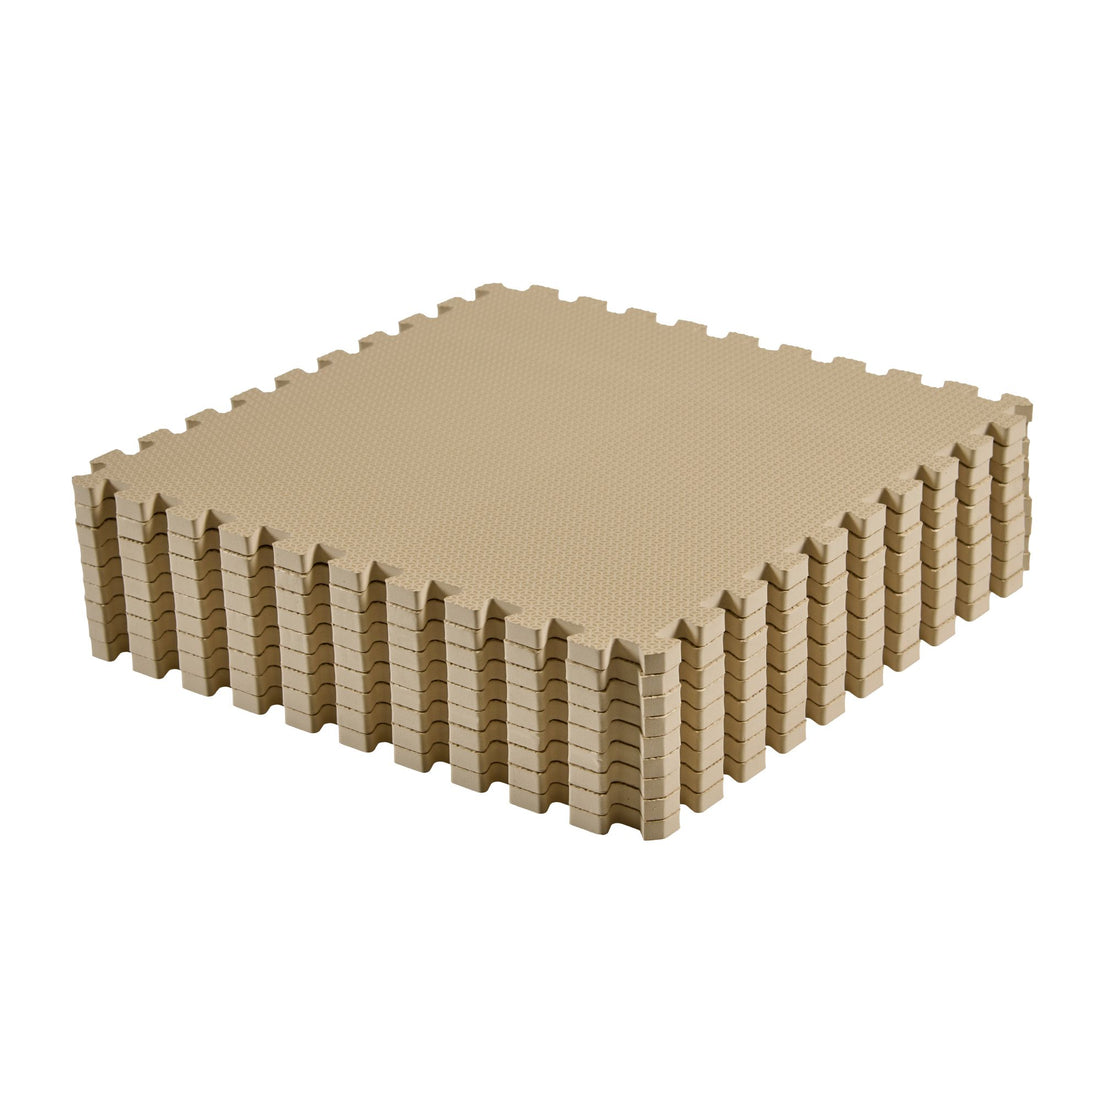 Toddlekind Classic Puzzle Playmat Sandstone 131x131cm - 9 Tiles & 12 Edging Borders